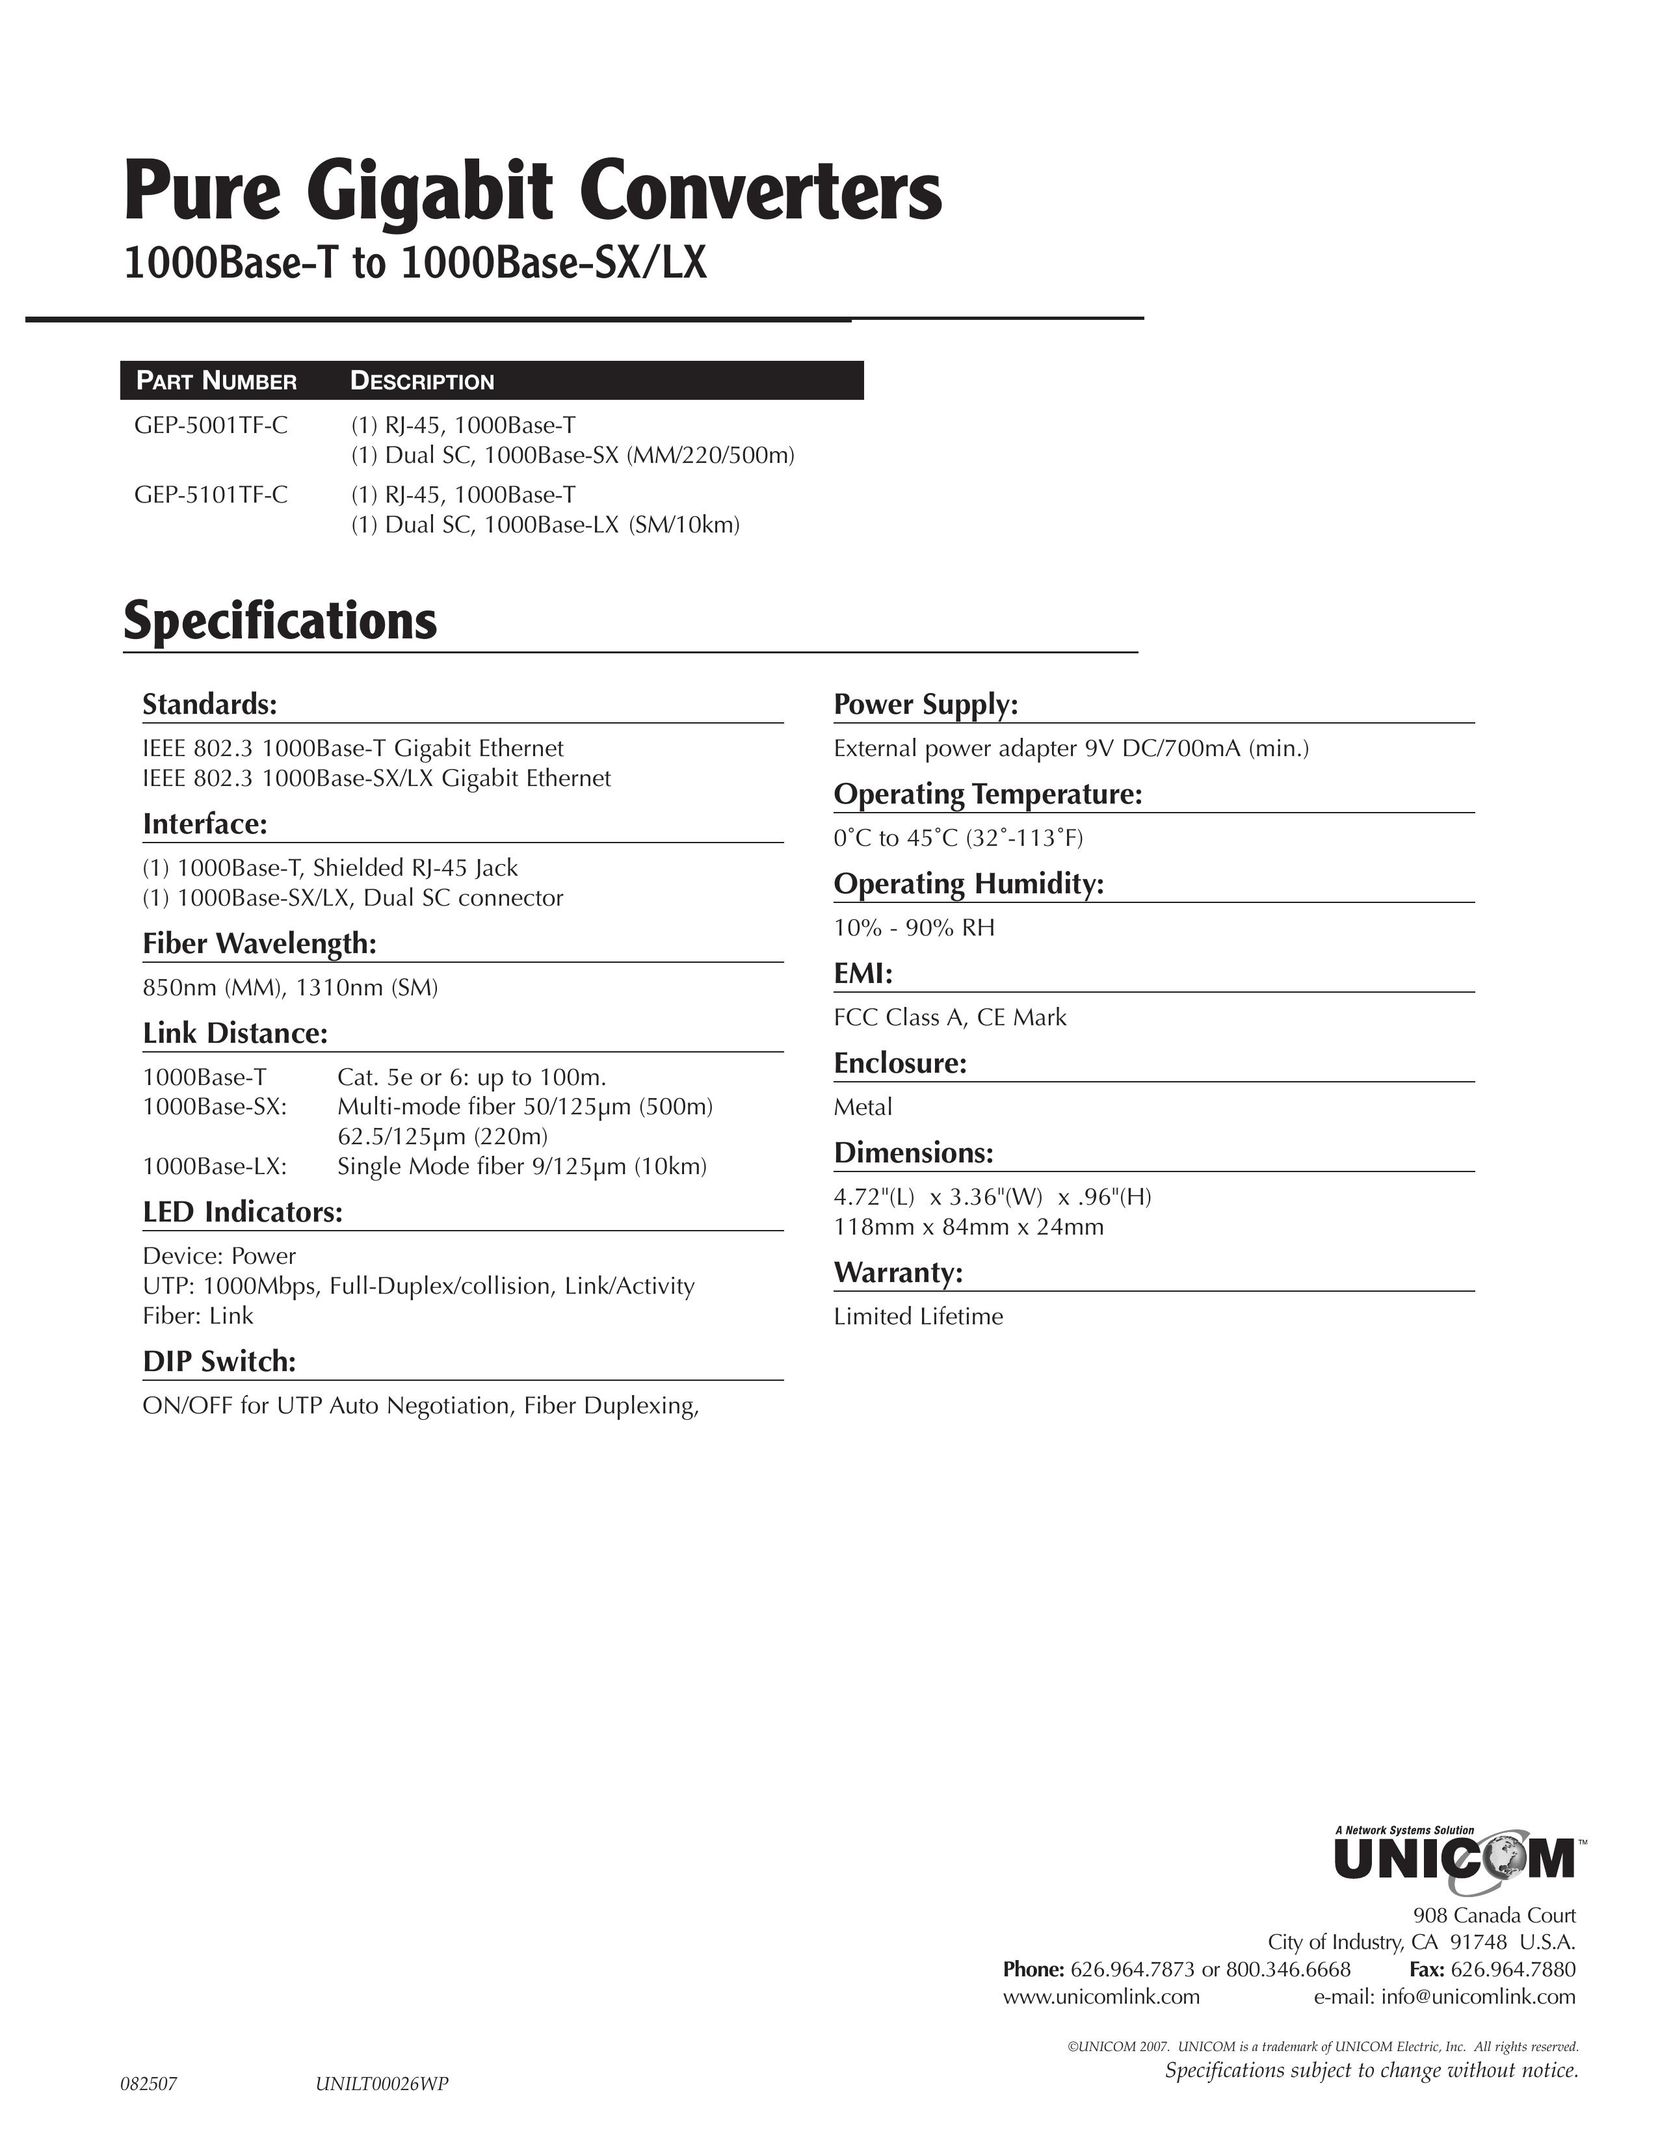 UNICOM Electric GEP-5101TF-C Network Card User Manual